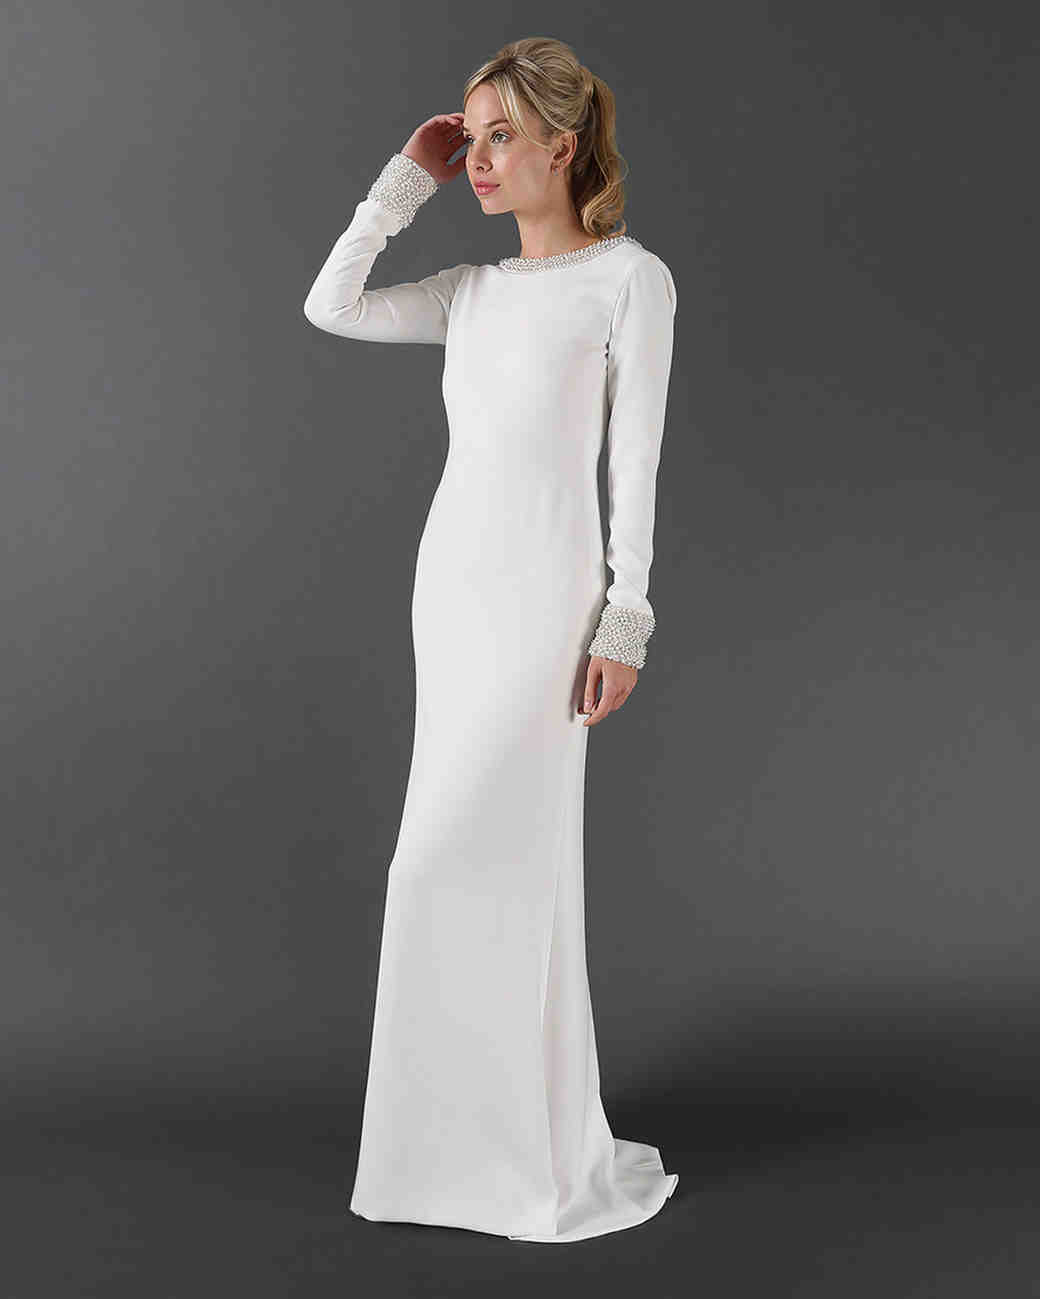 Randi Rahm Fall 2017 Wedding Dress Collection | Martha Stewart Weddings